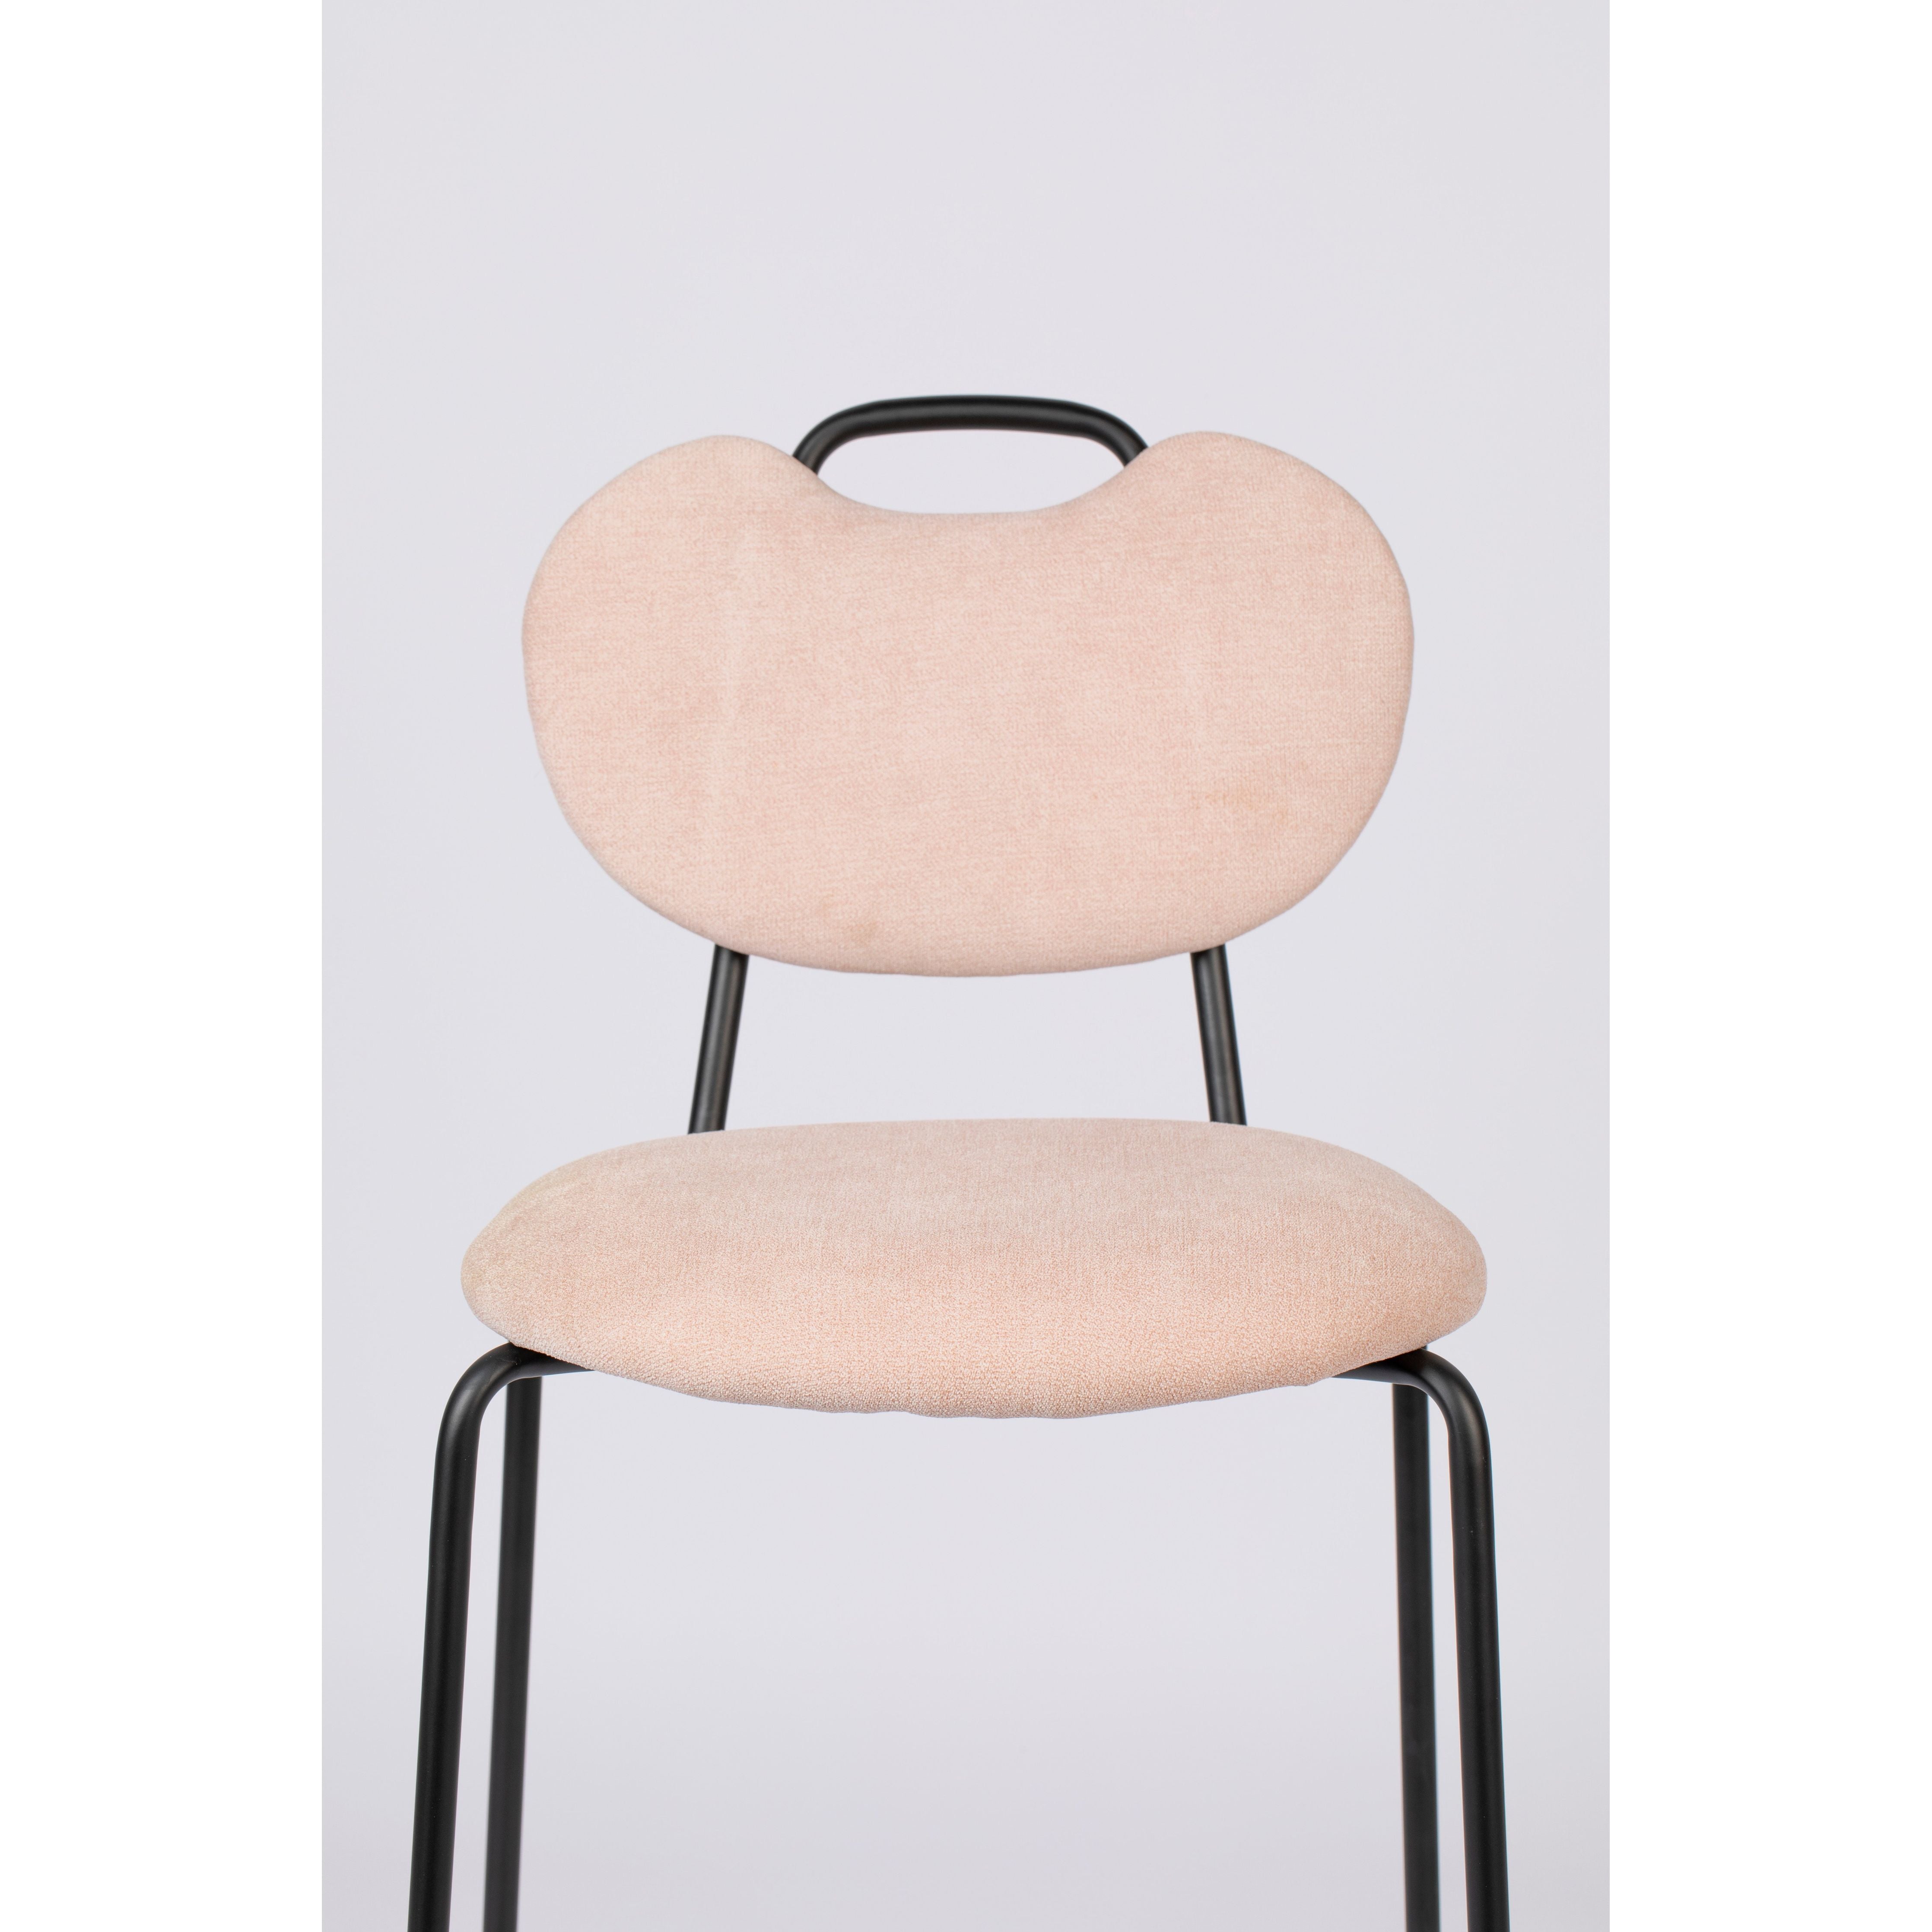 Bar stool aspen light pink